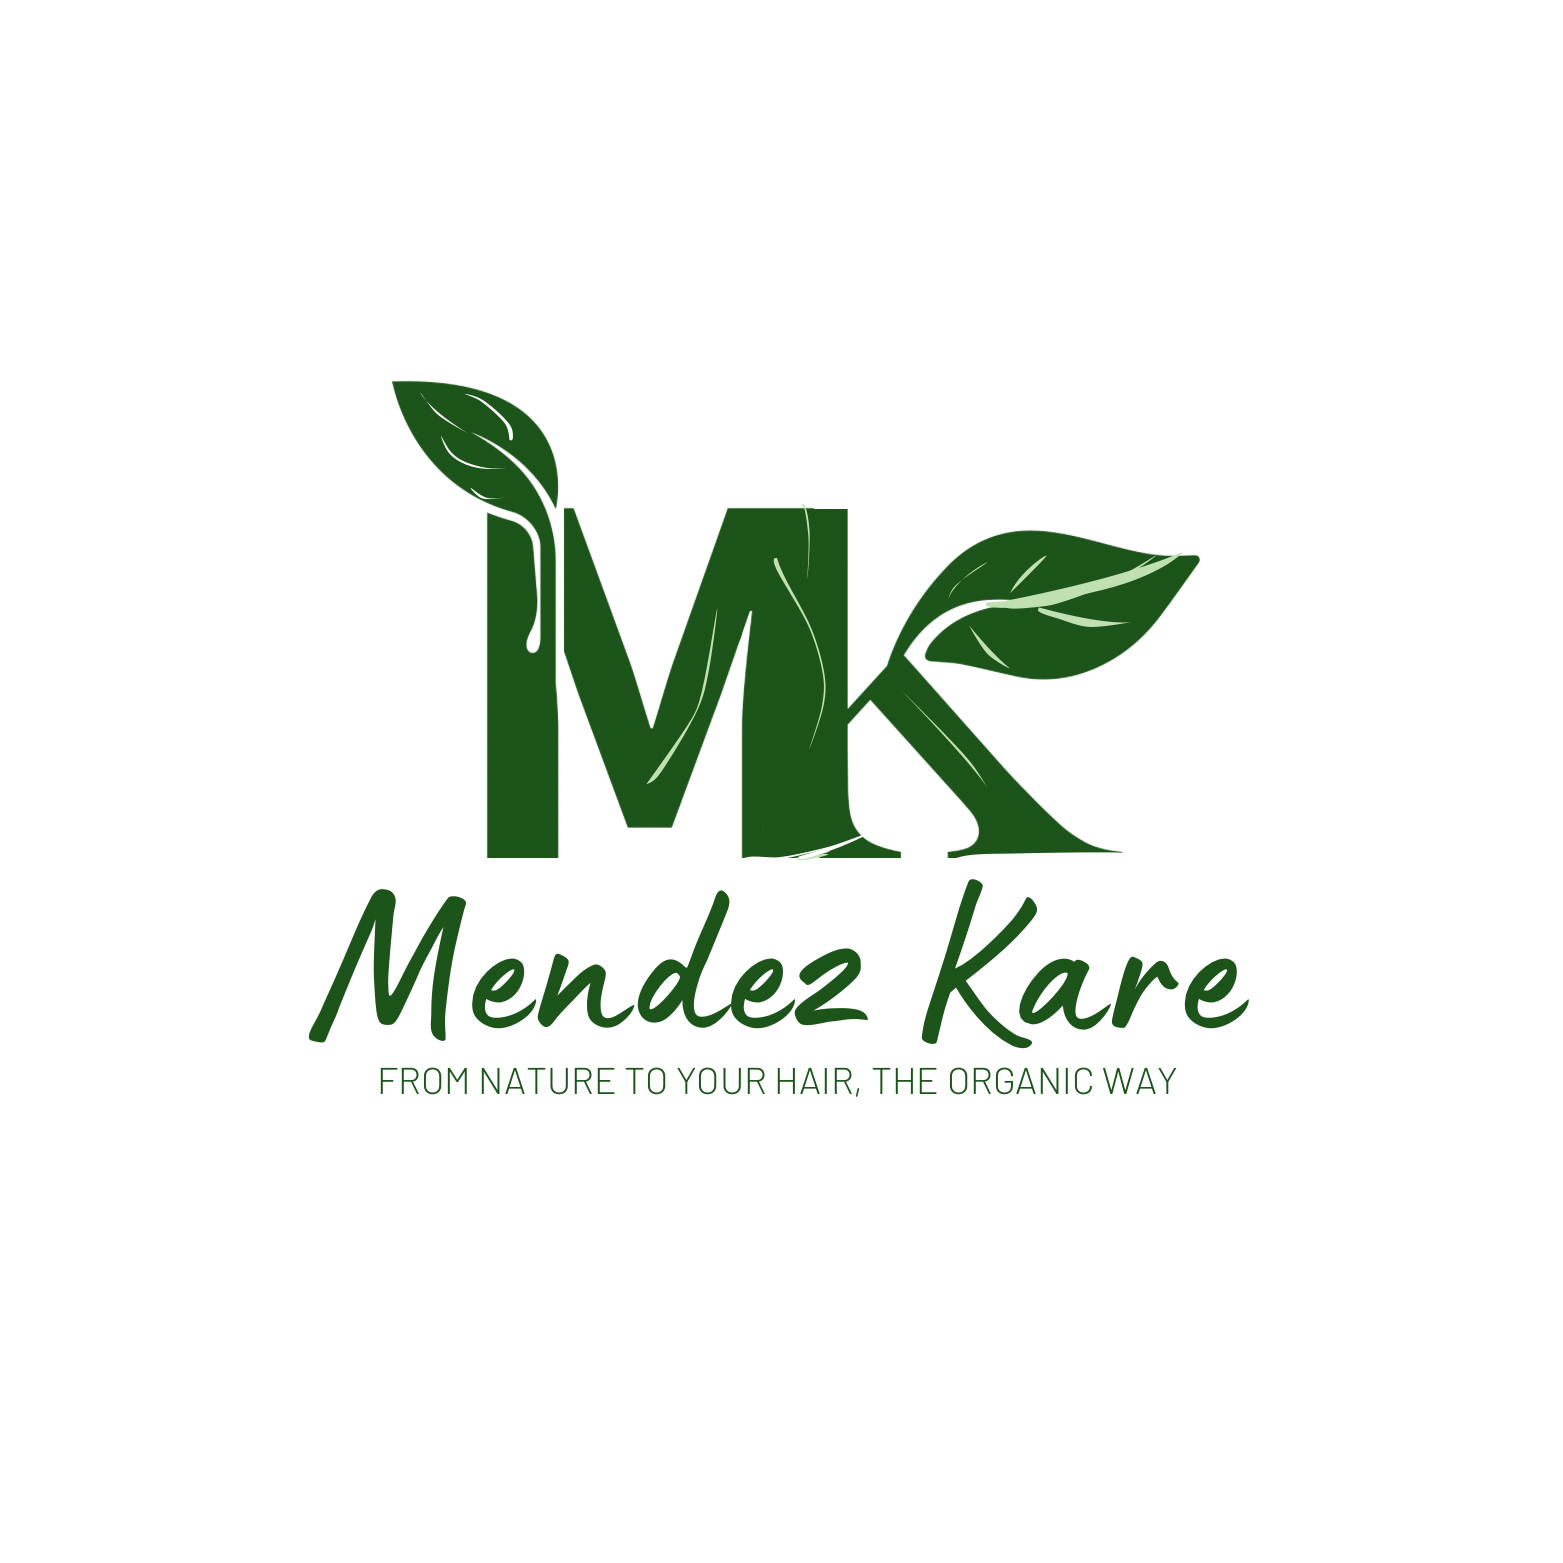 Mendez Kare